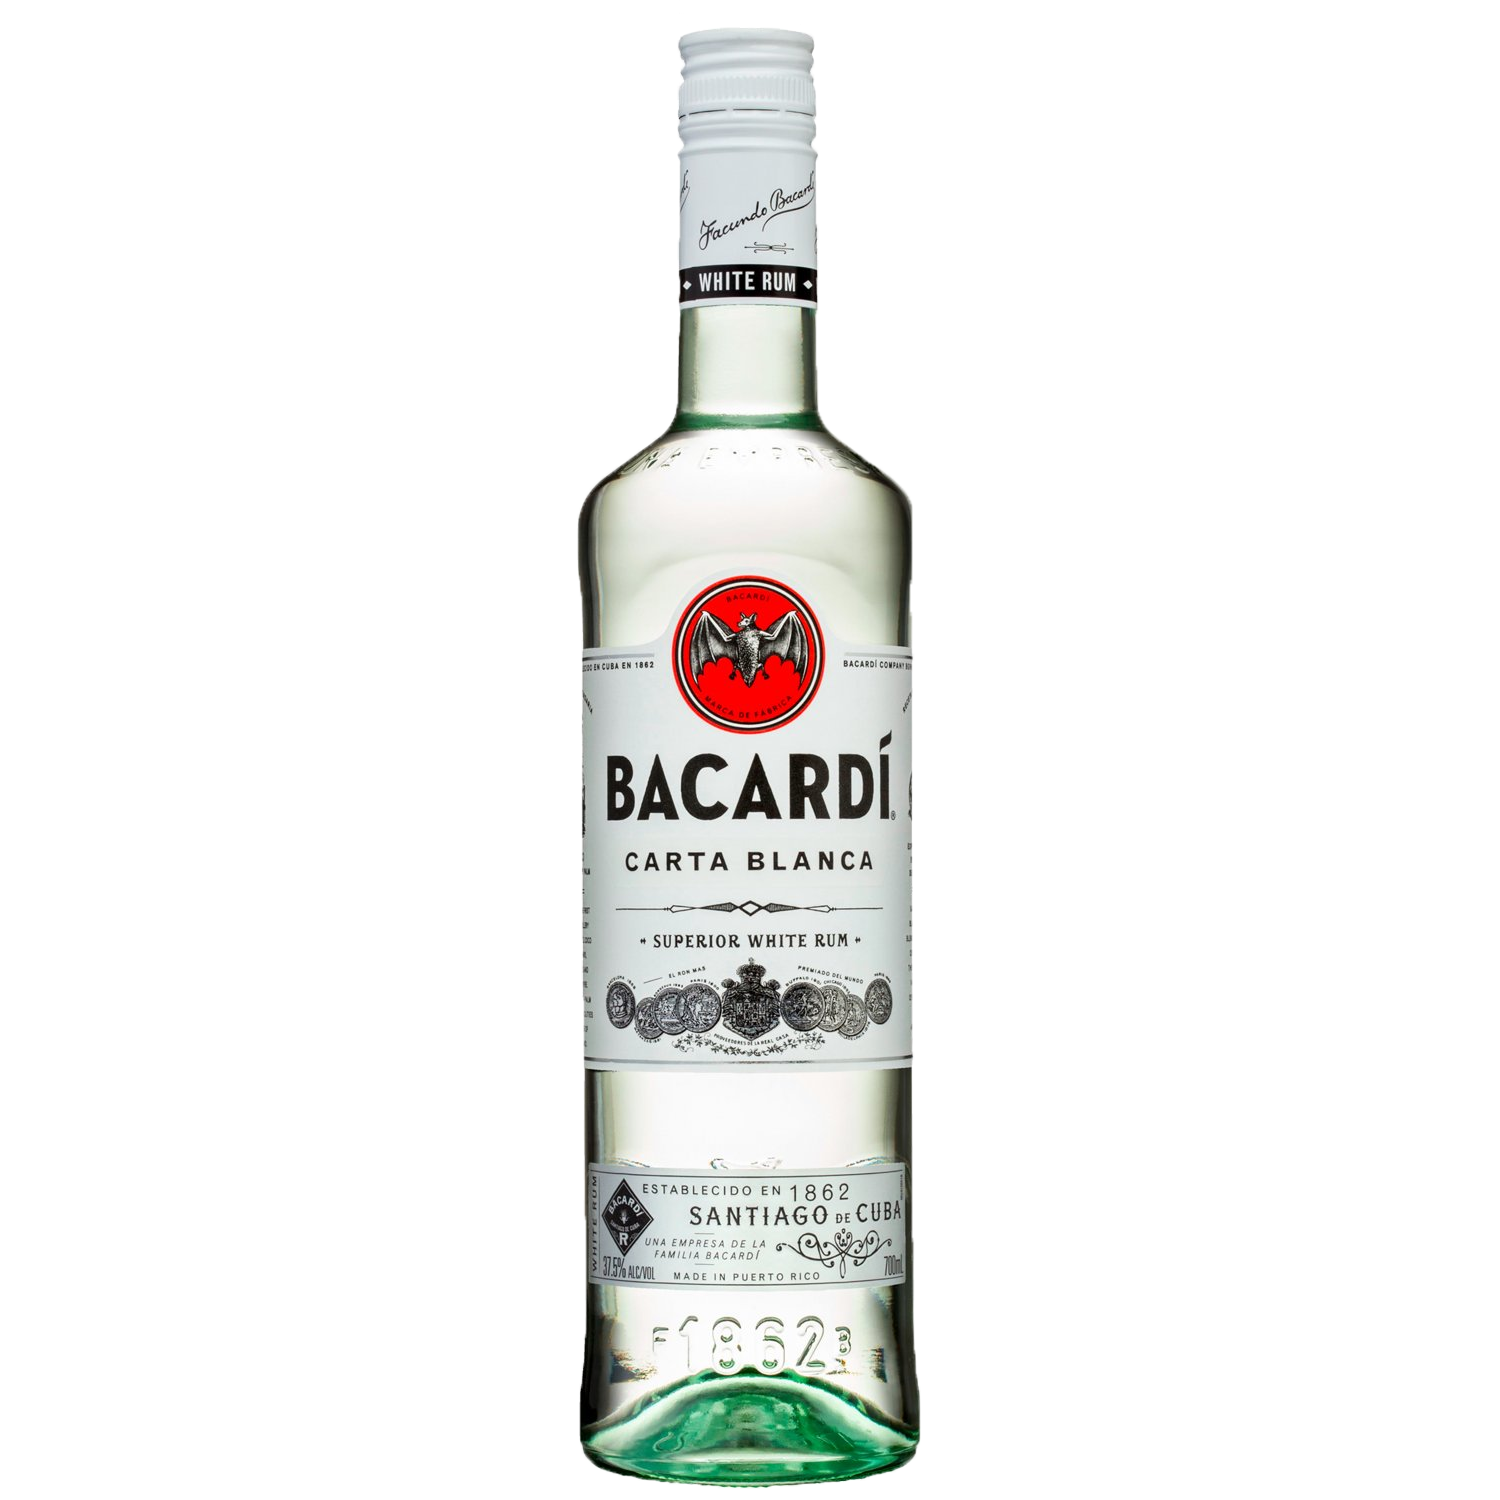 Bacardi Rum 1000ml